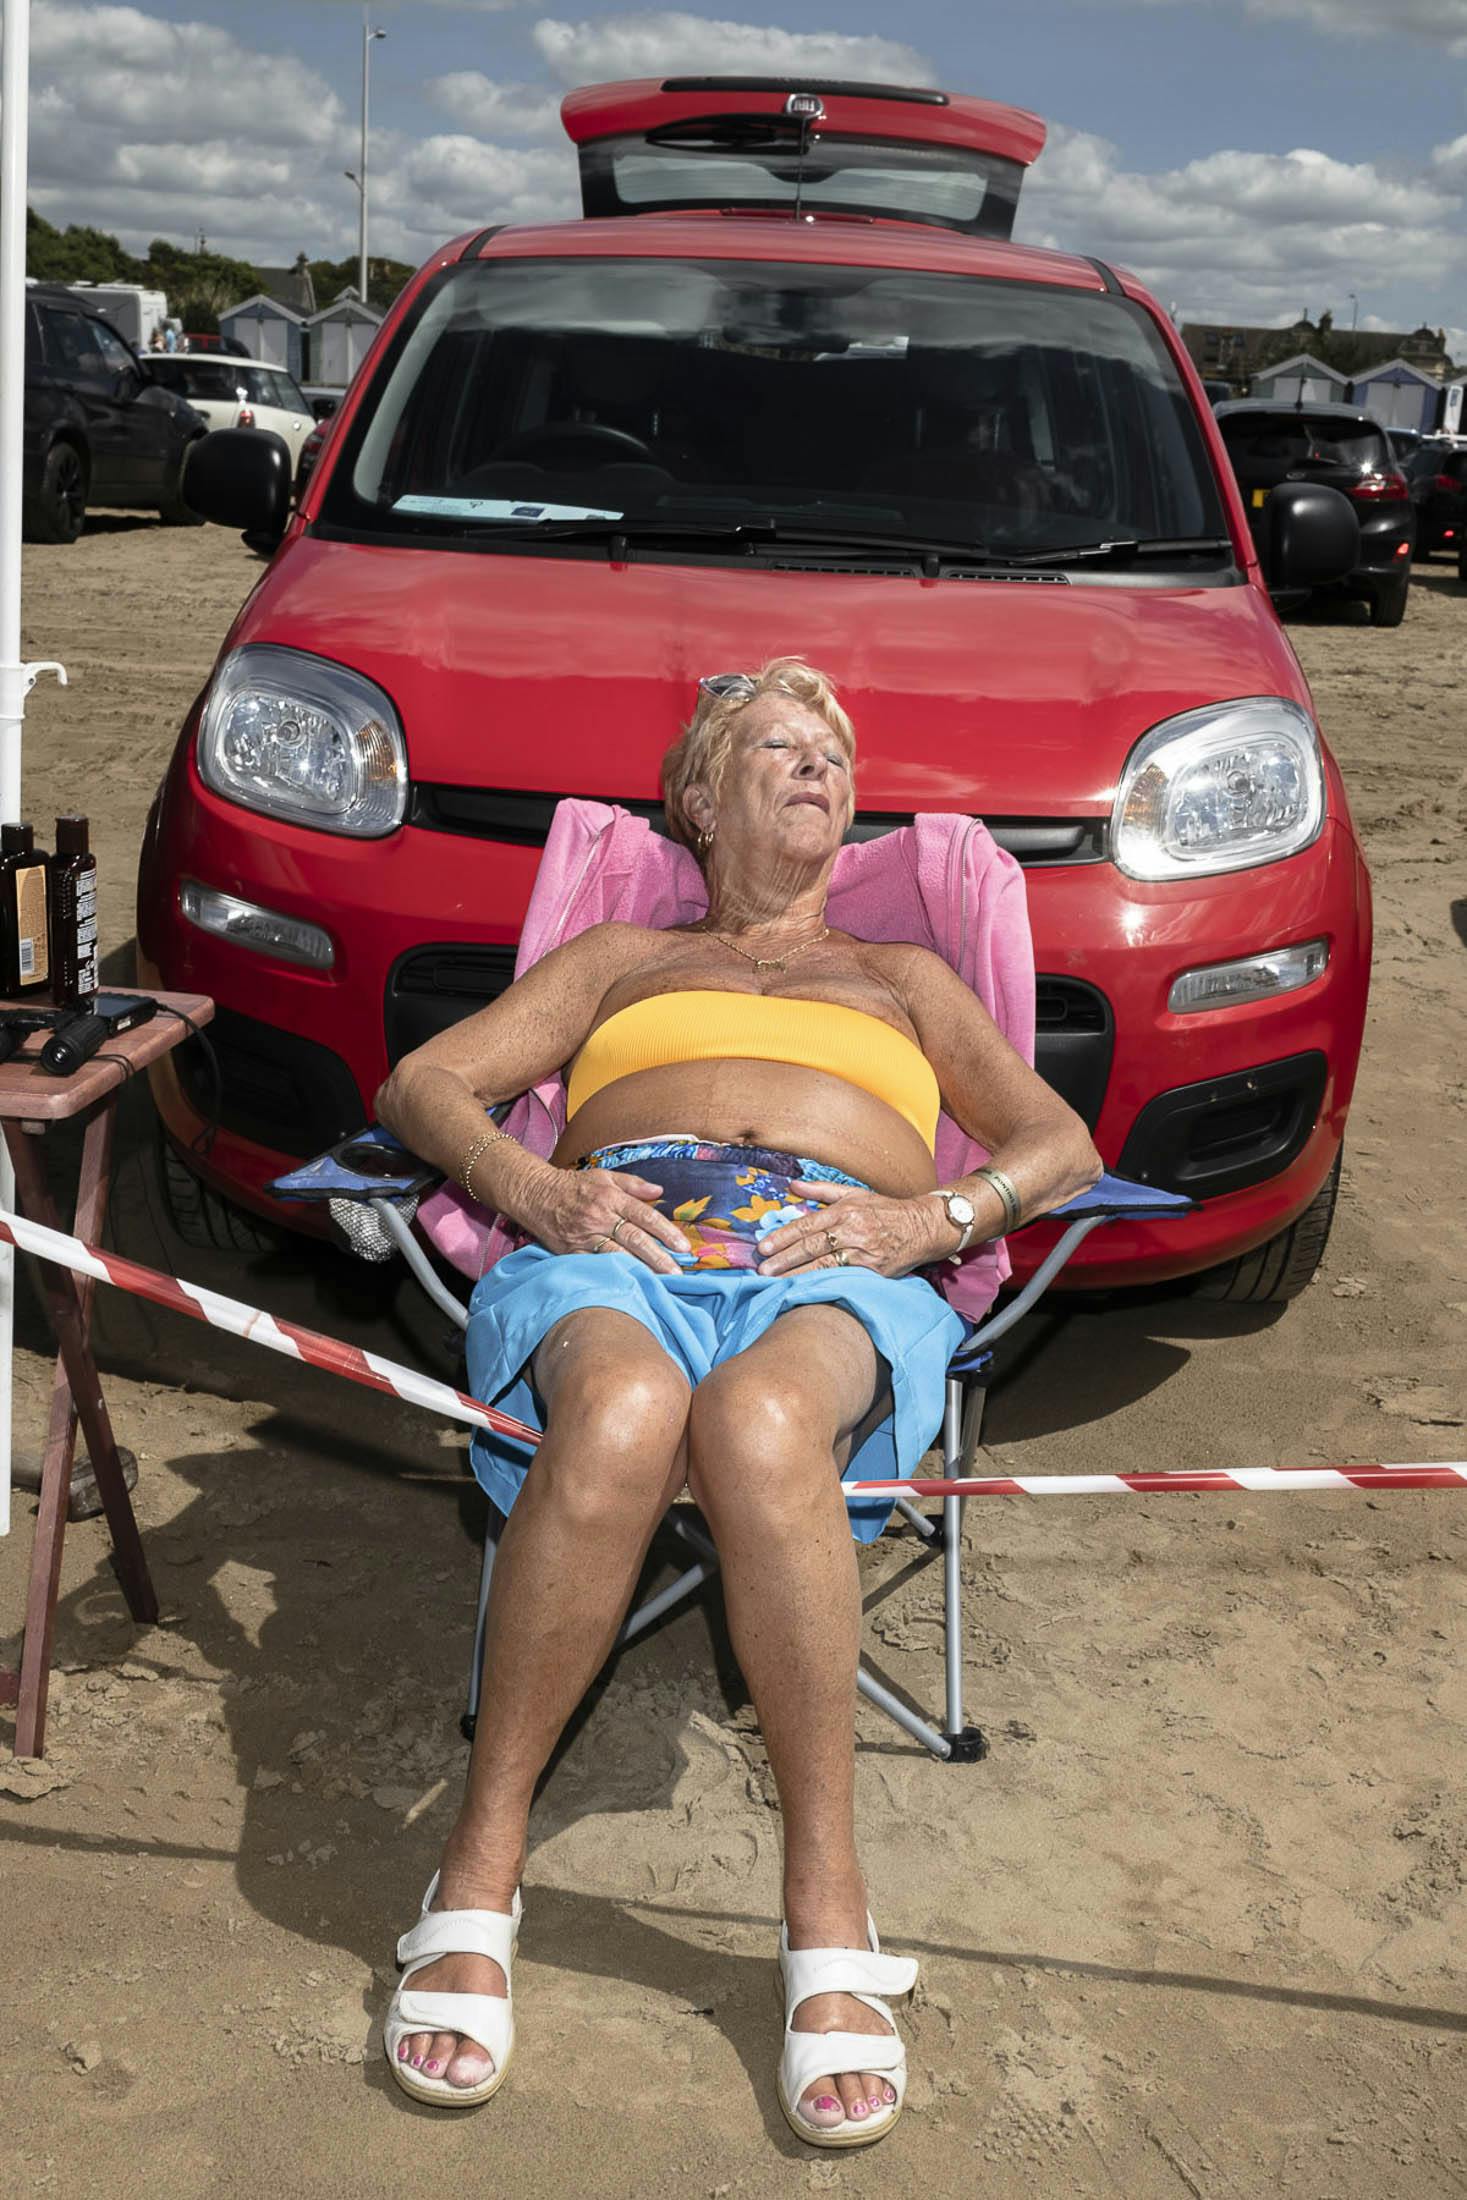 Woman sun bathing in Weston-super-Mare